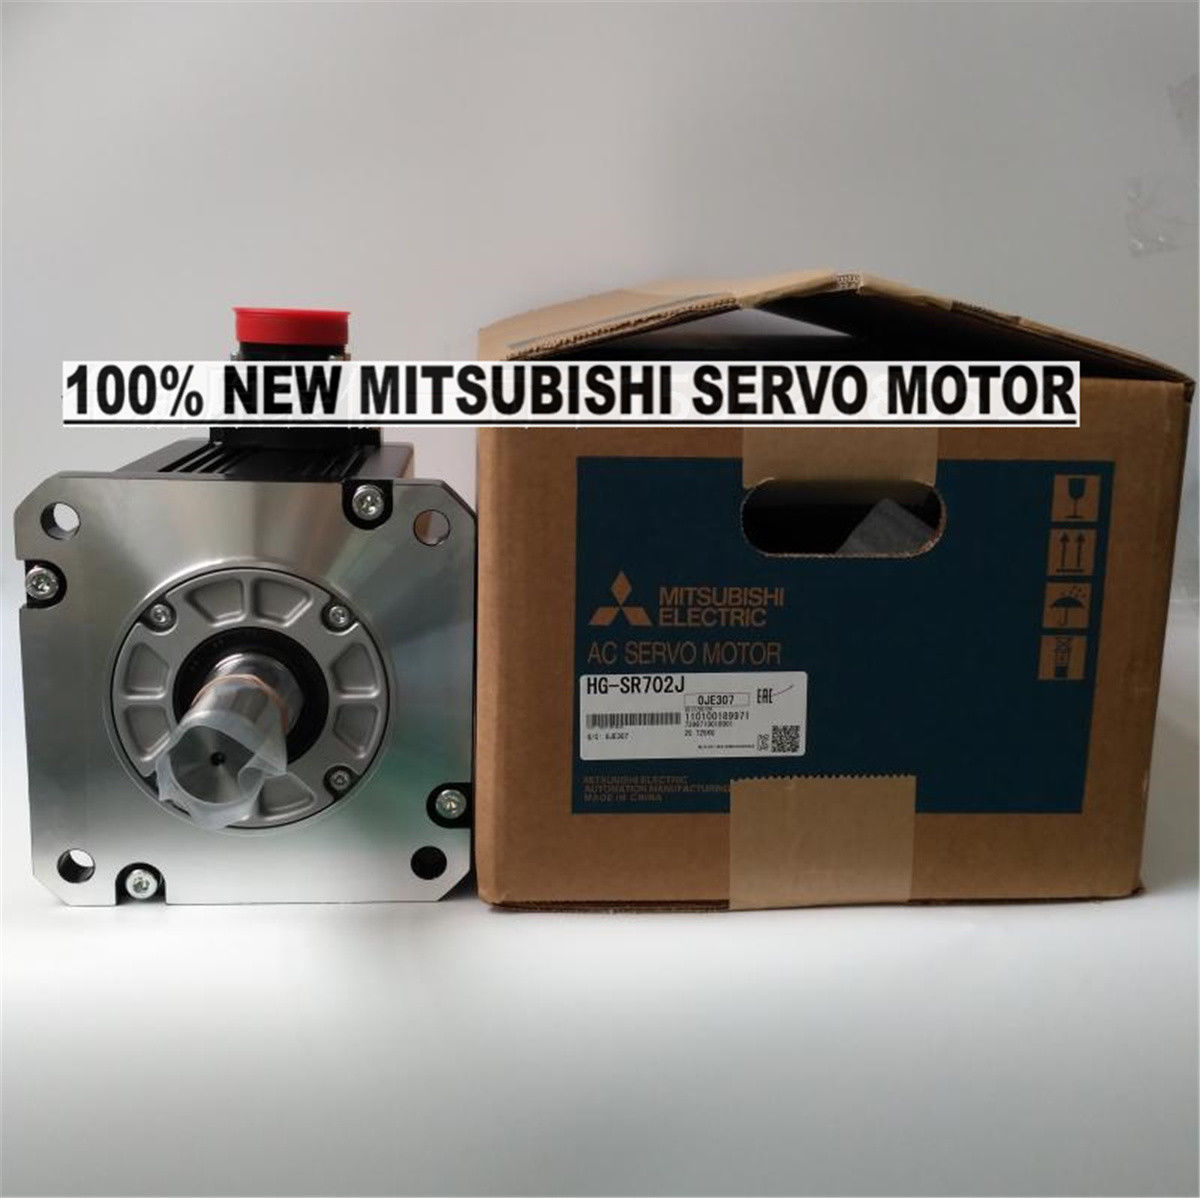 Brand NEW Mitsubishi Servo Motor HG-SR702J in box HGSR702J